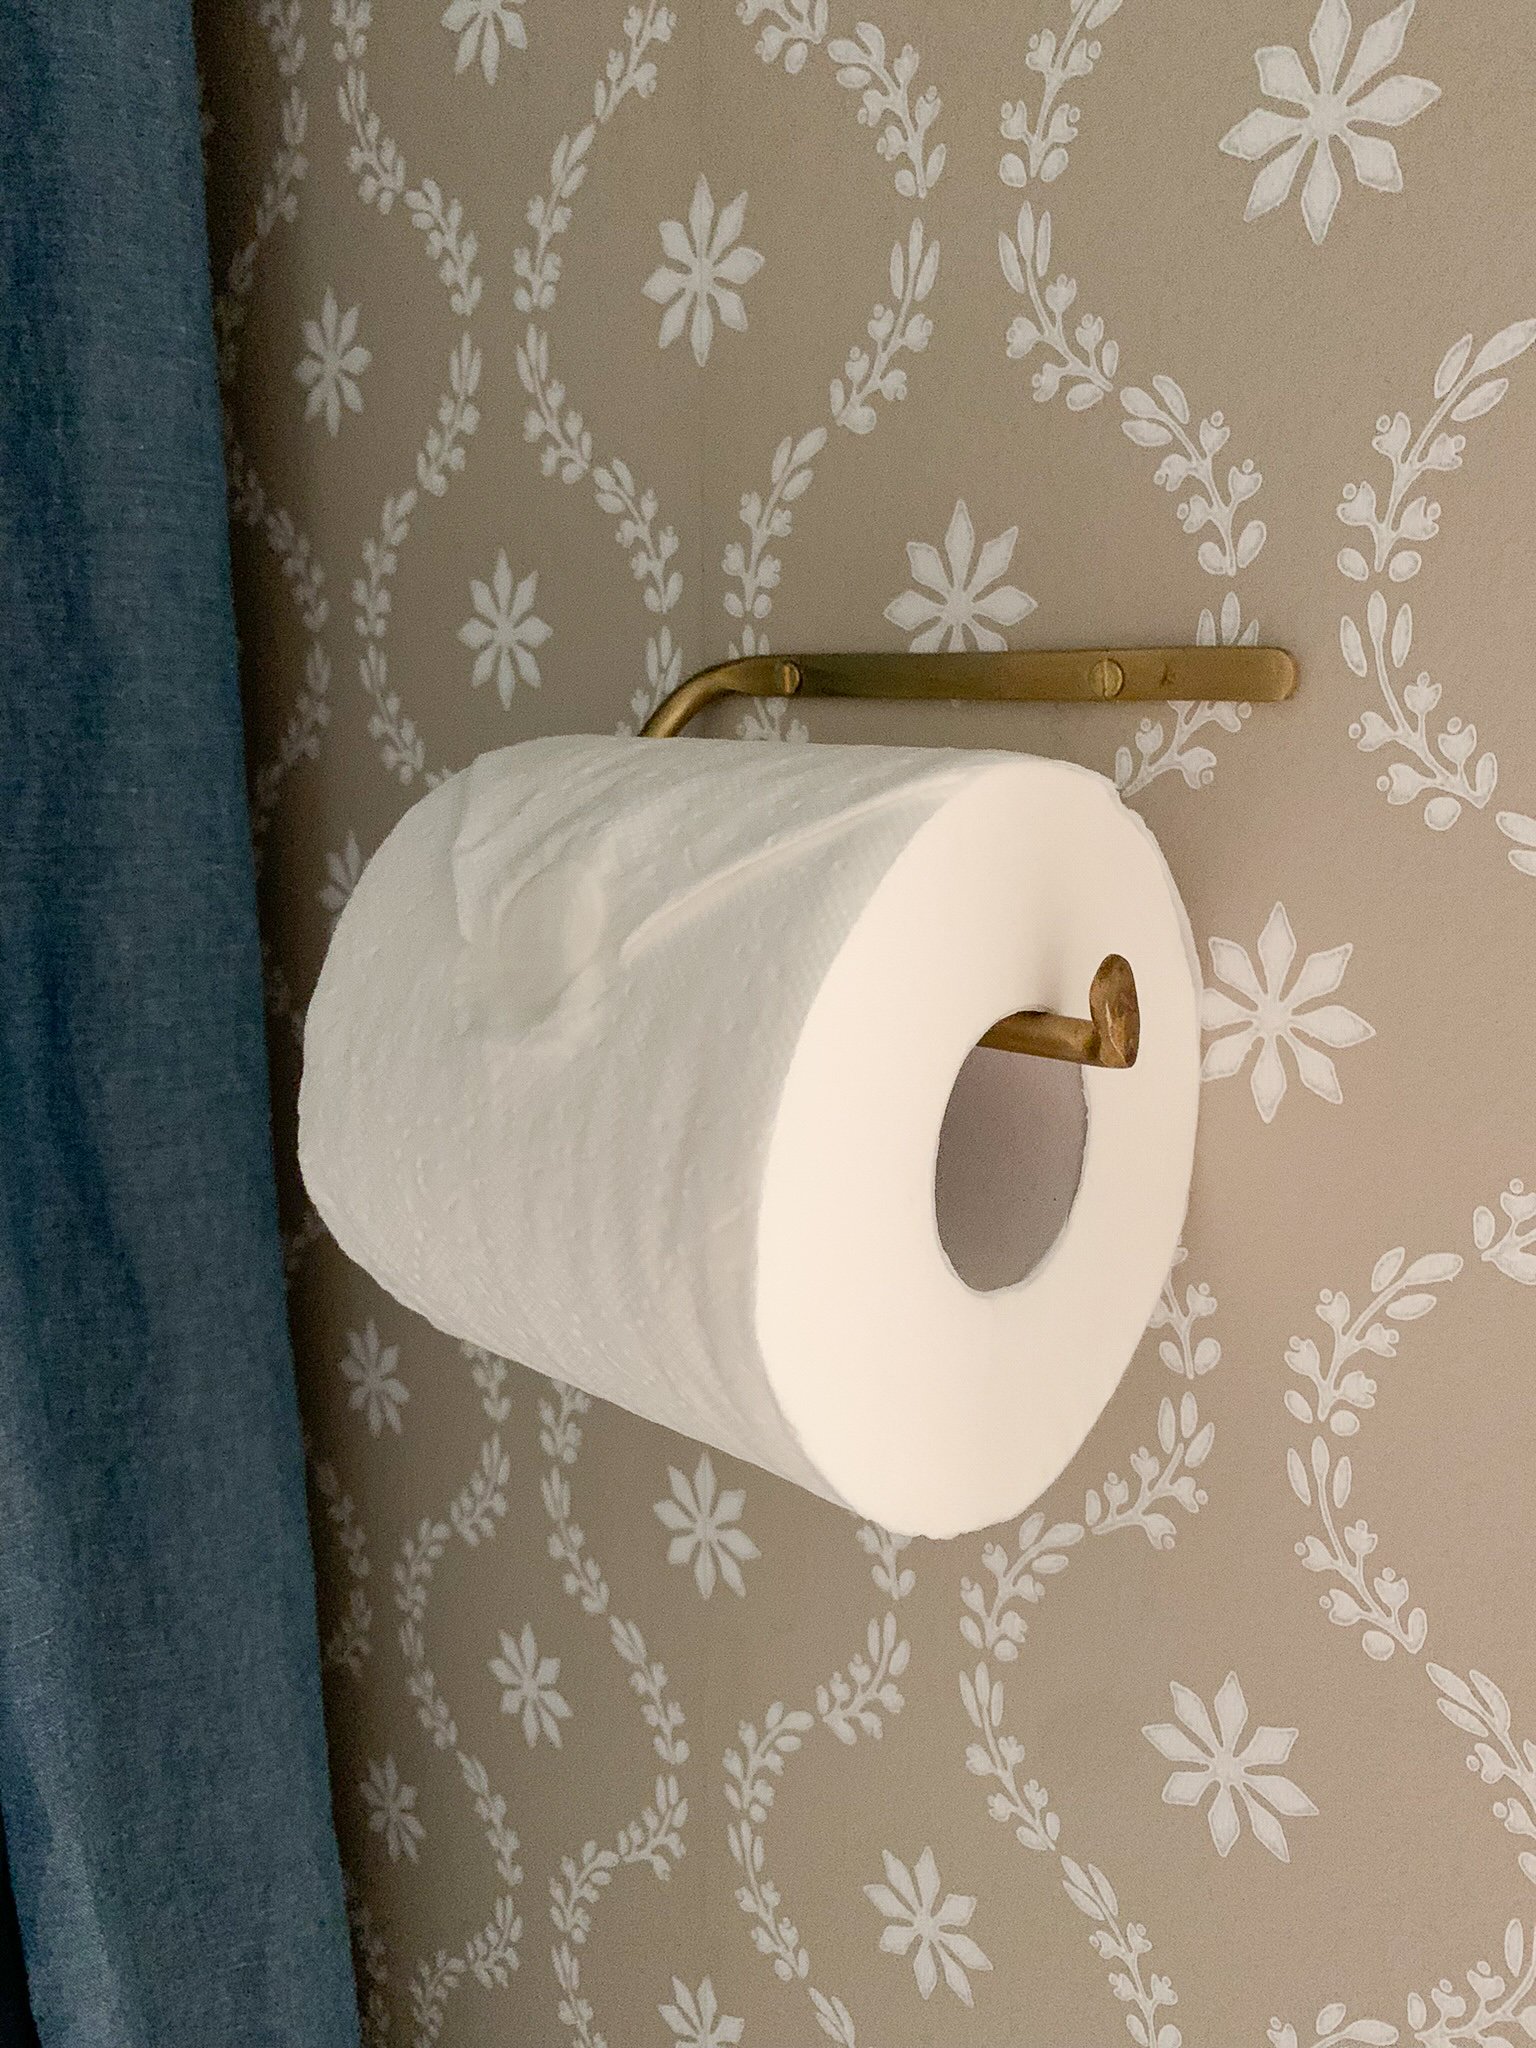 Modern brass toilet paper holder on a floral wallpaper background